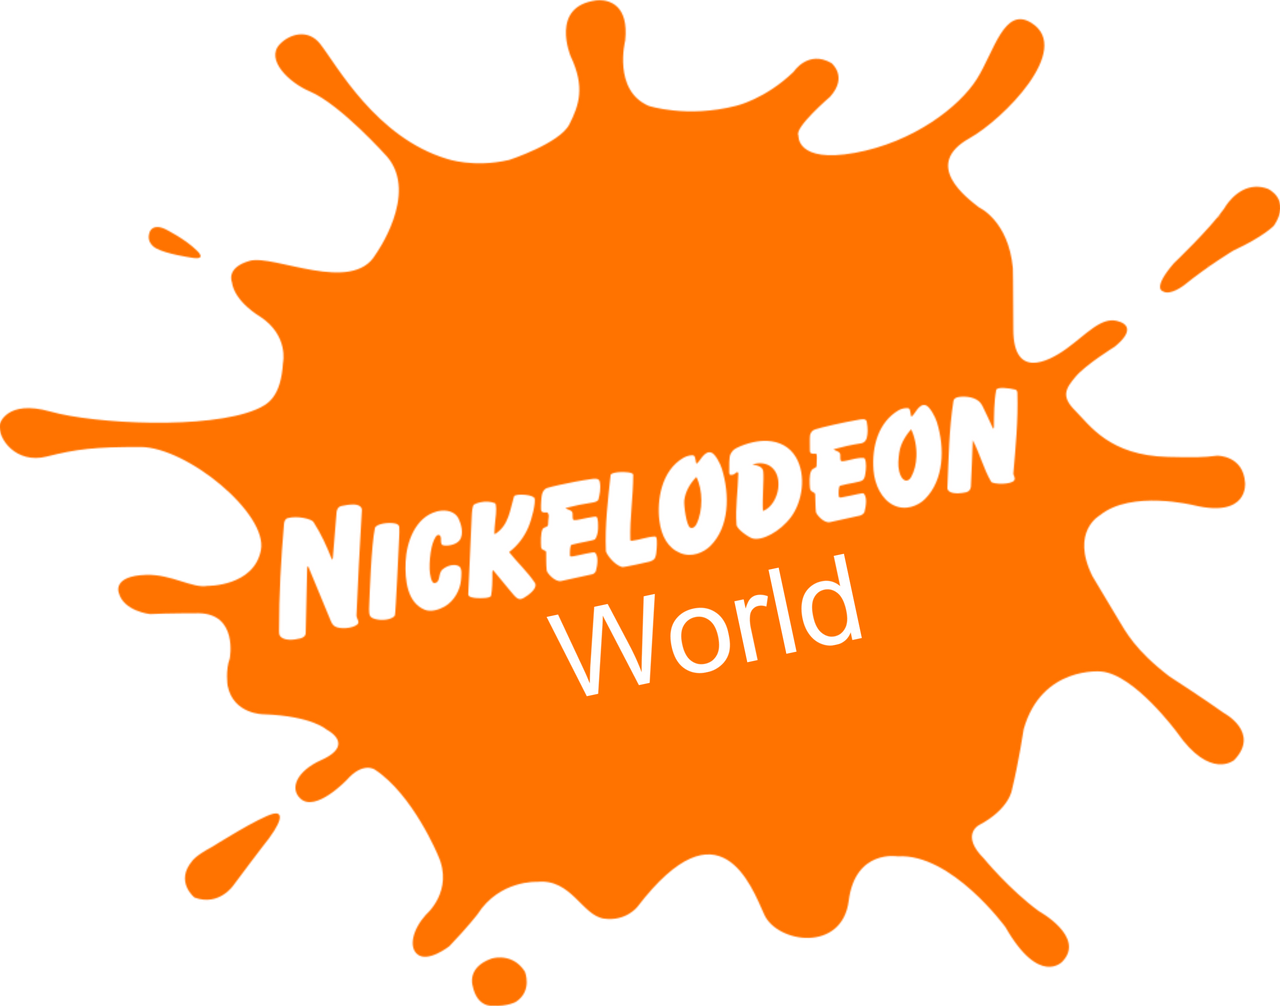 NickelodeonWorld DeviantArt Gallery